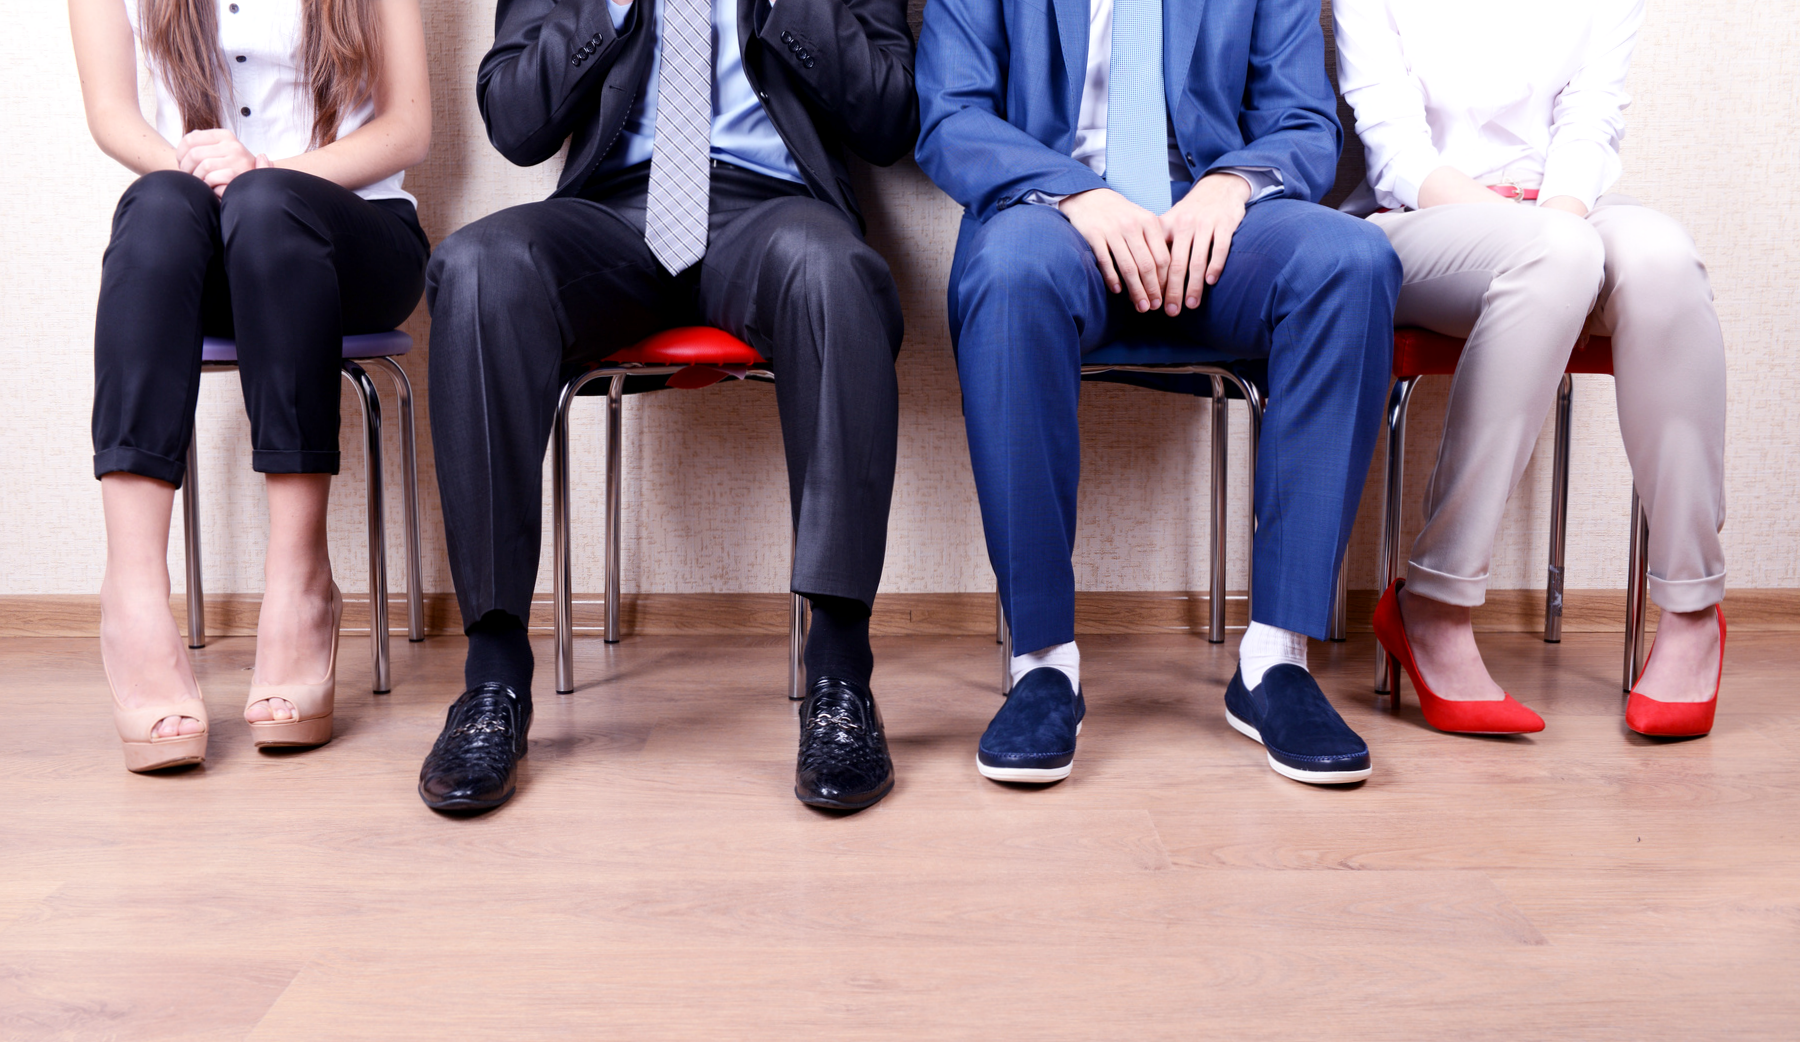 bureau workey leap hiring culture, bias, job interview, job offer, elevator pitch